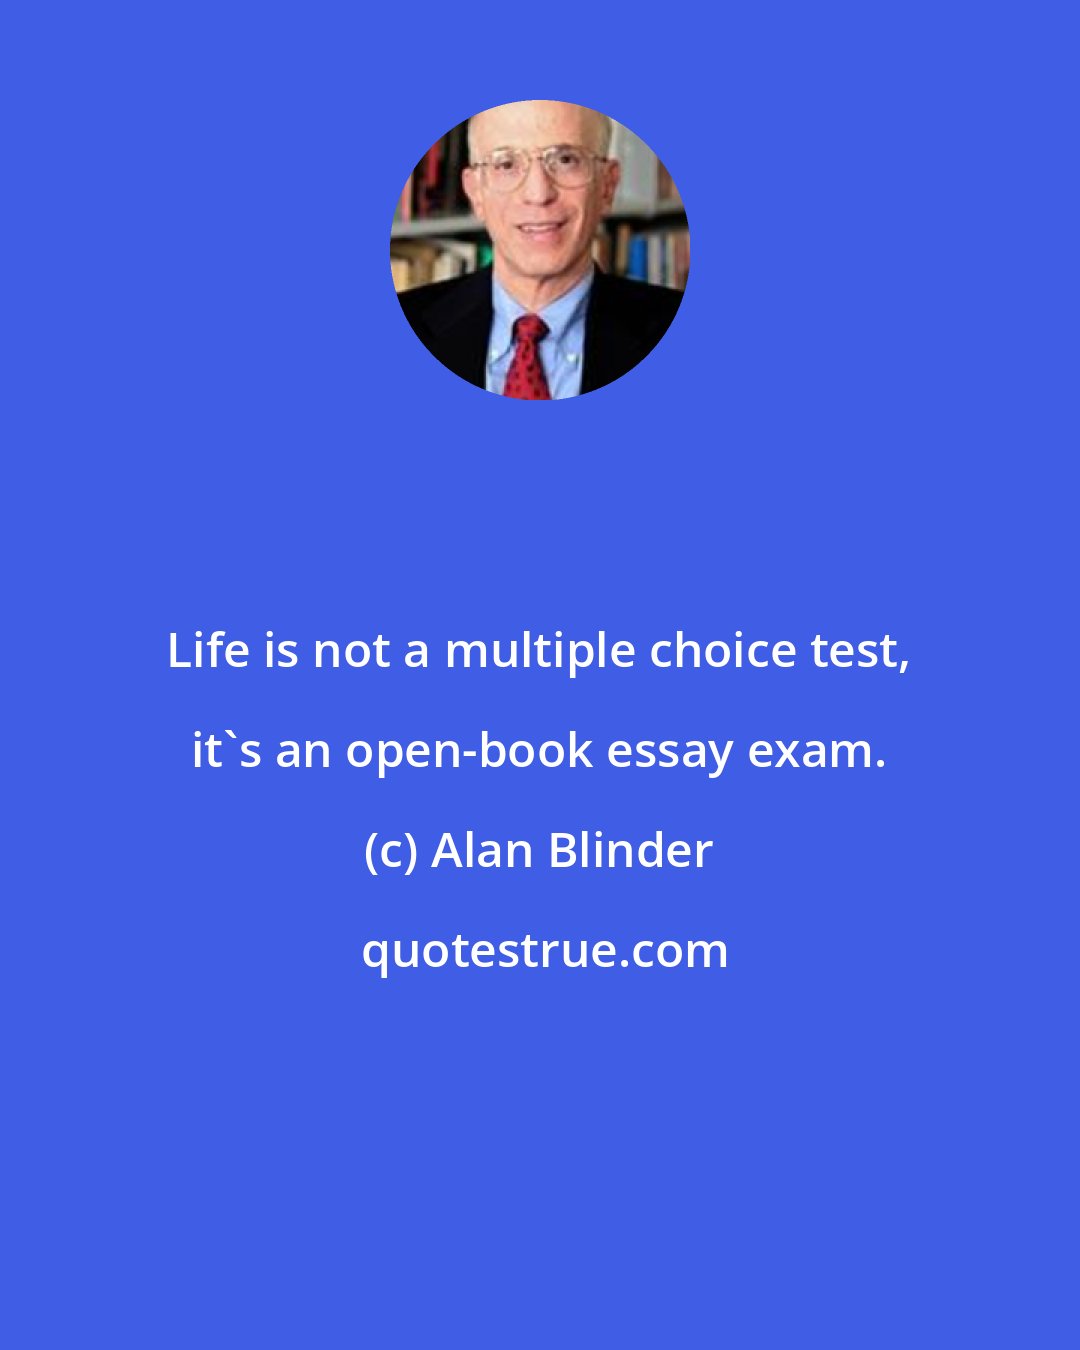 Alan Blinder: Life is not a multiple choice test, it's an open-book essay exam.